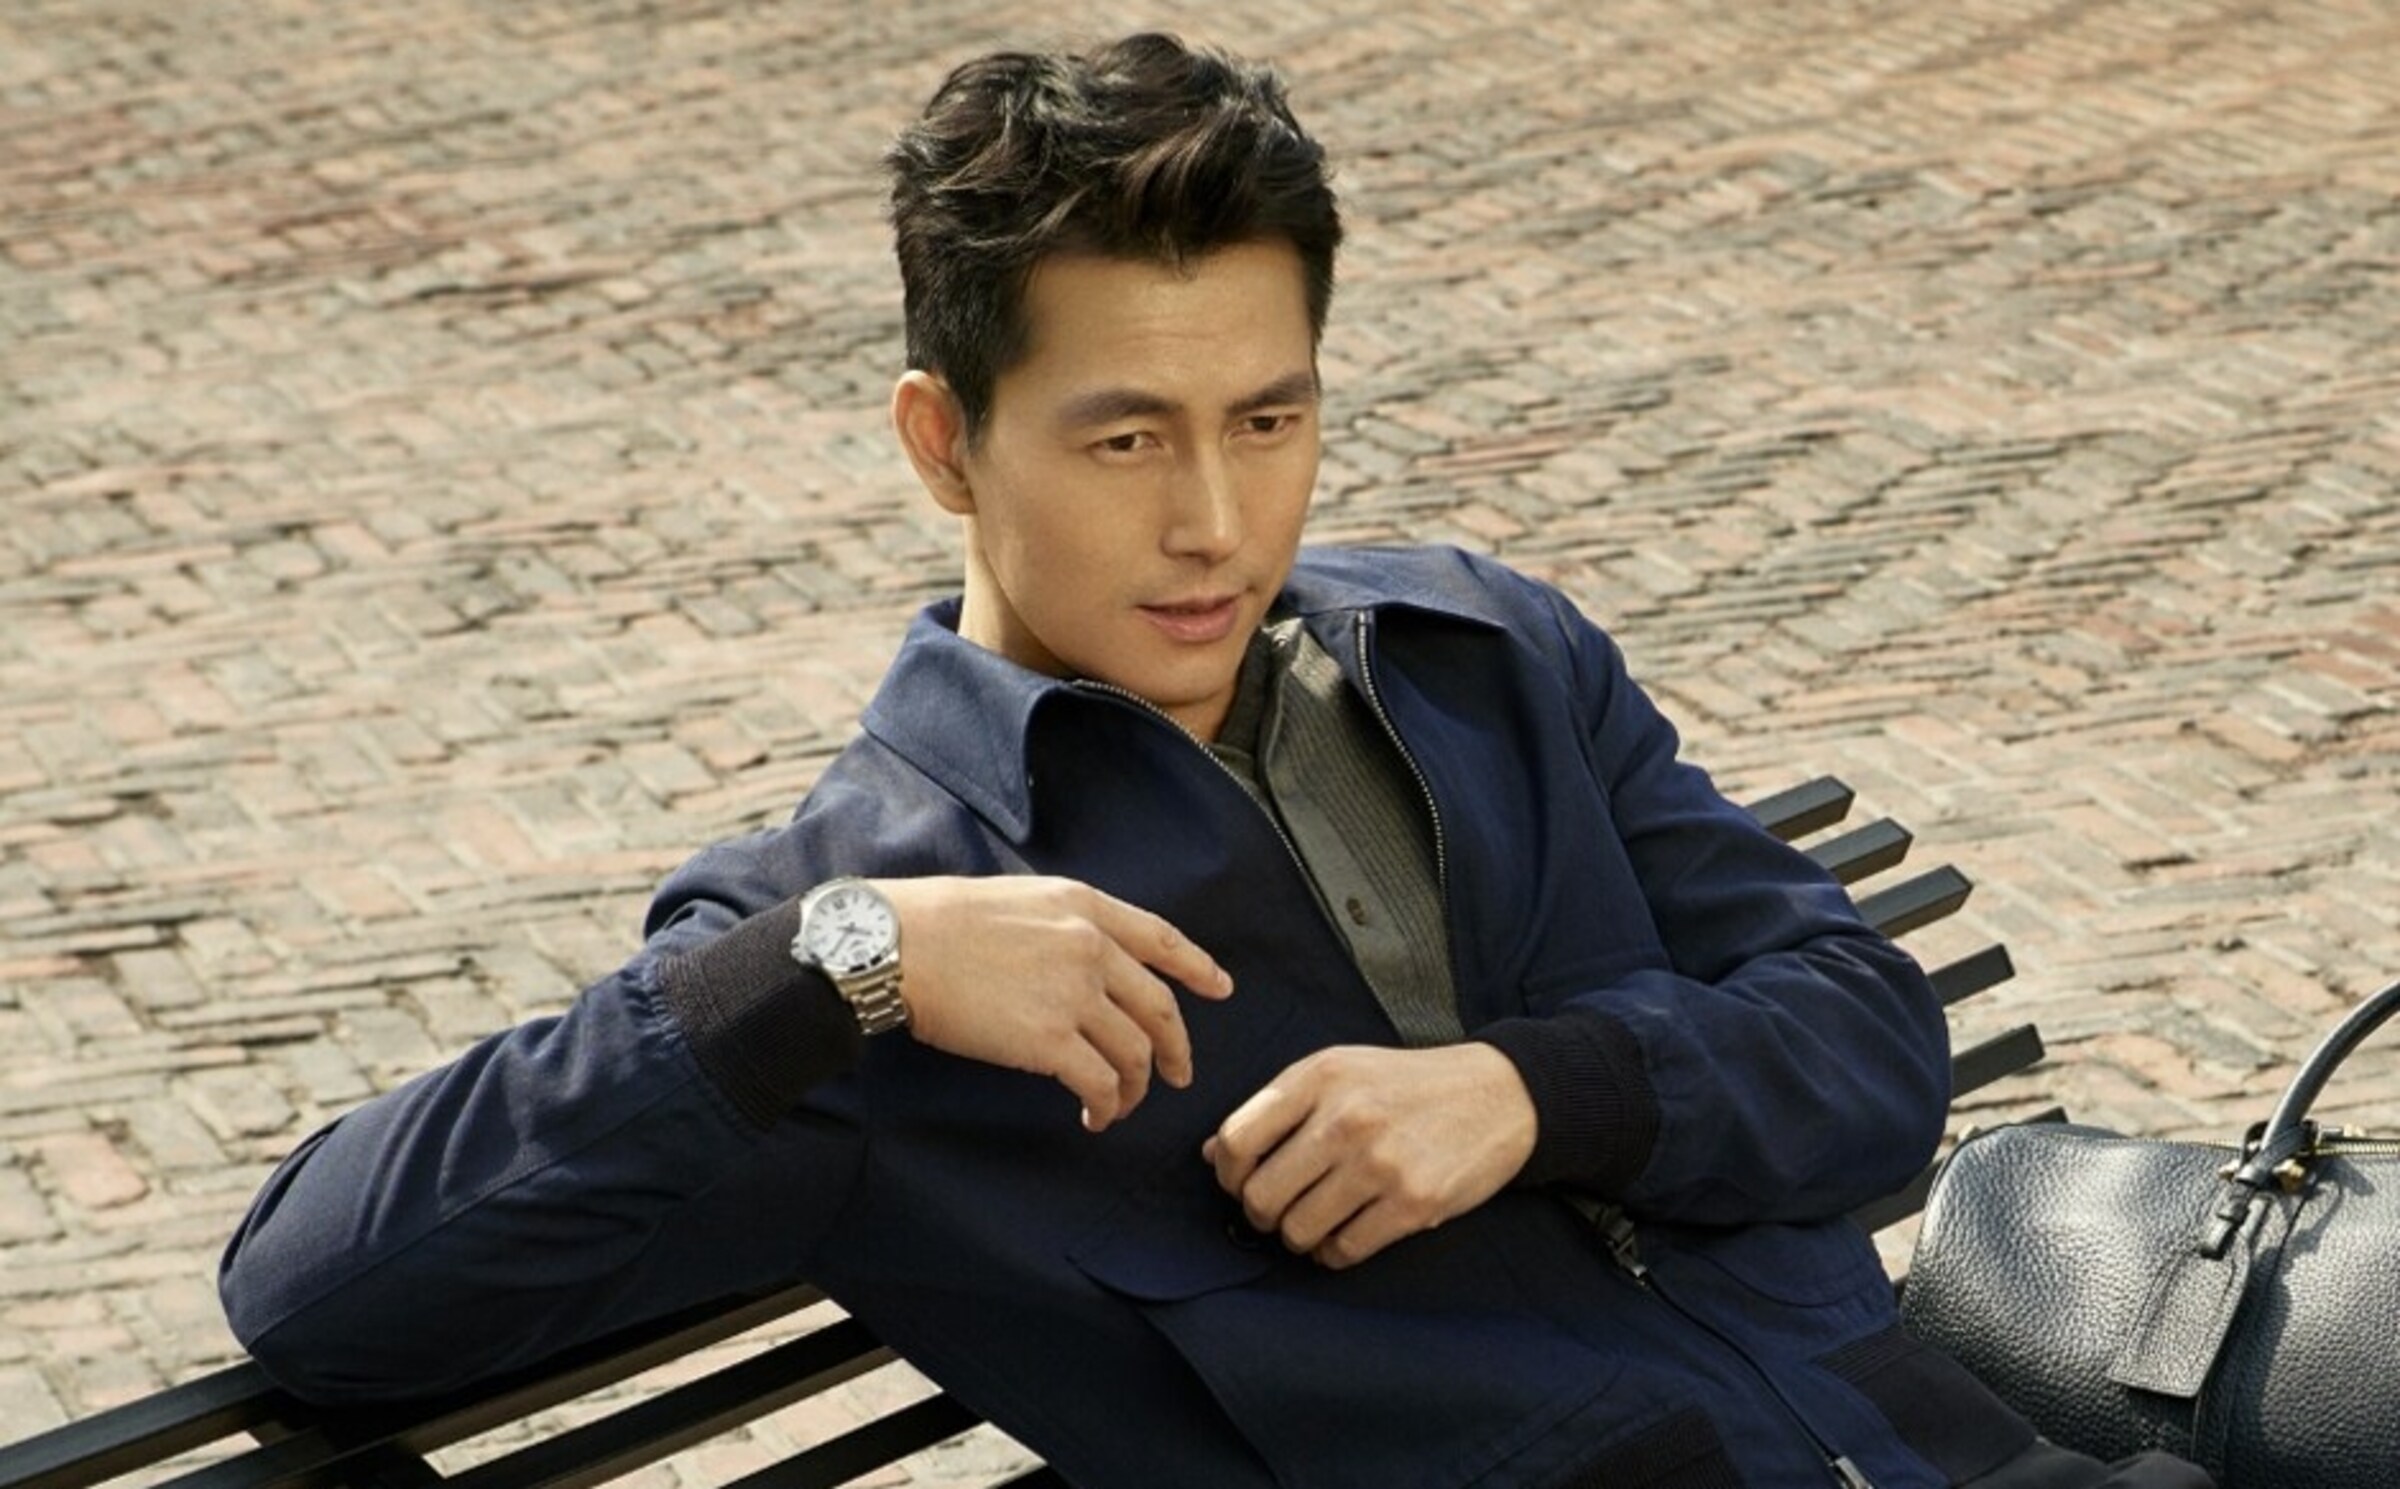 Longines Ambassador Jung Woo Sung is wearing a Longines watch